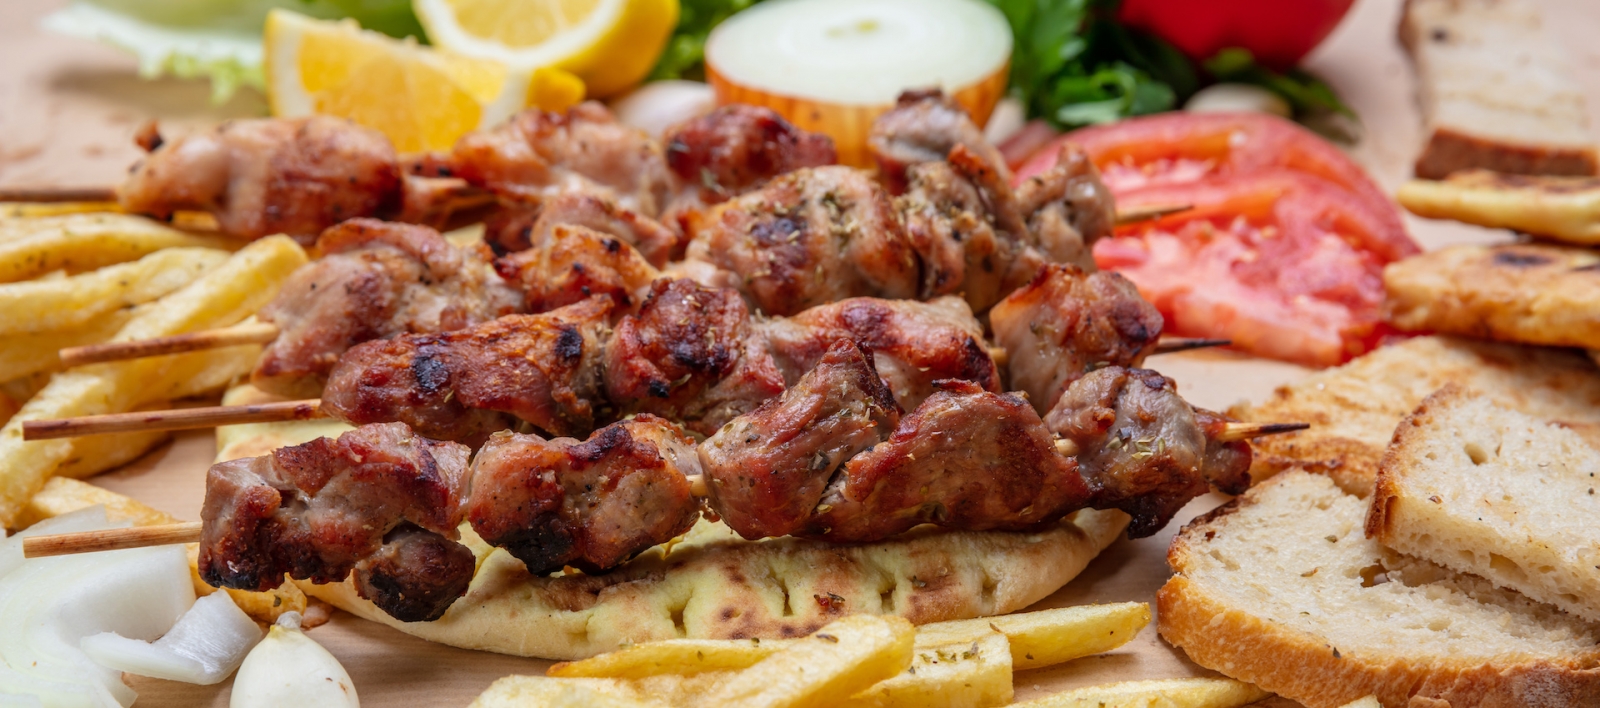 Souvlaki, brochetas de carne, comida de carne turca griega tradicional en pan de pita y papas